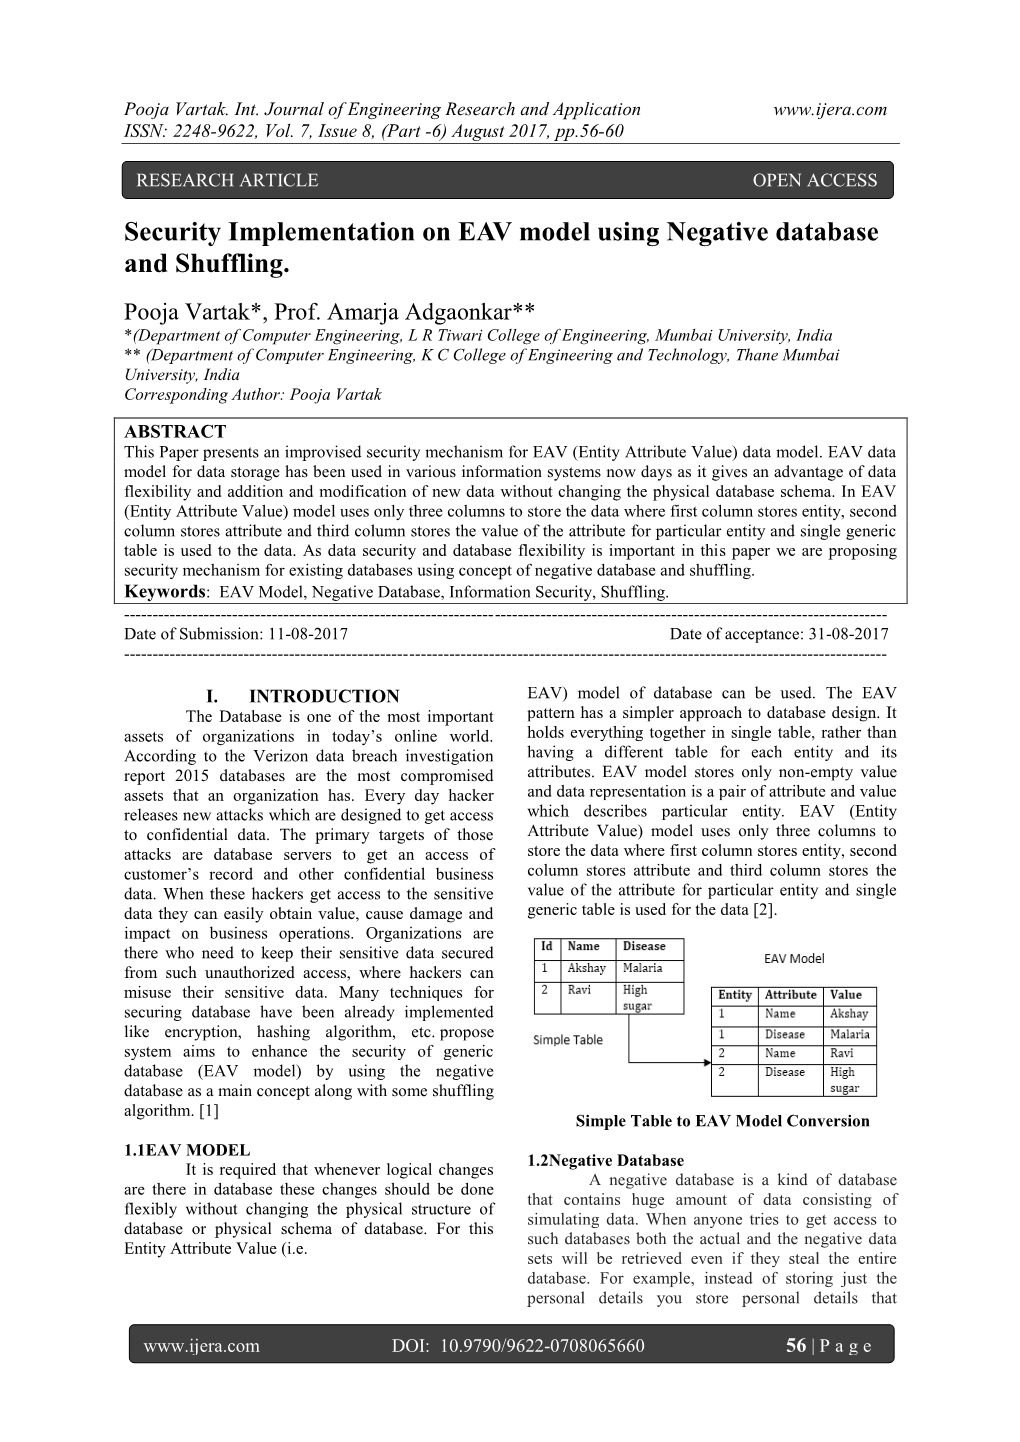 Security Implementation on EAV Model Using Negative Database and Shuffling